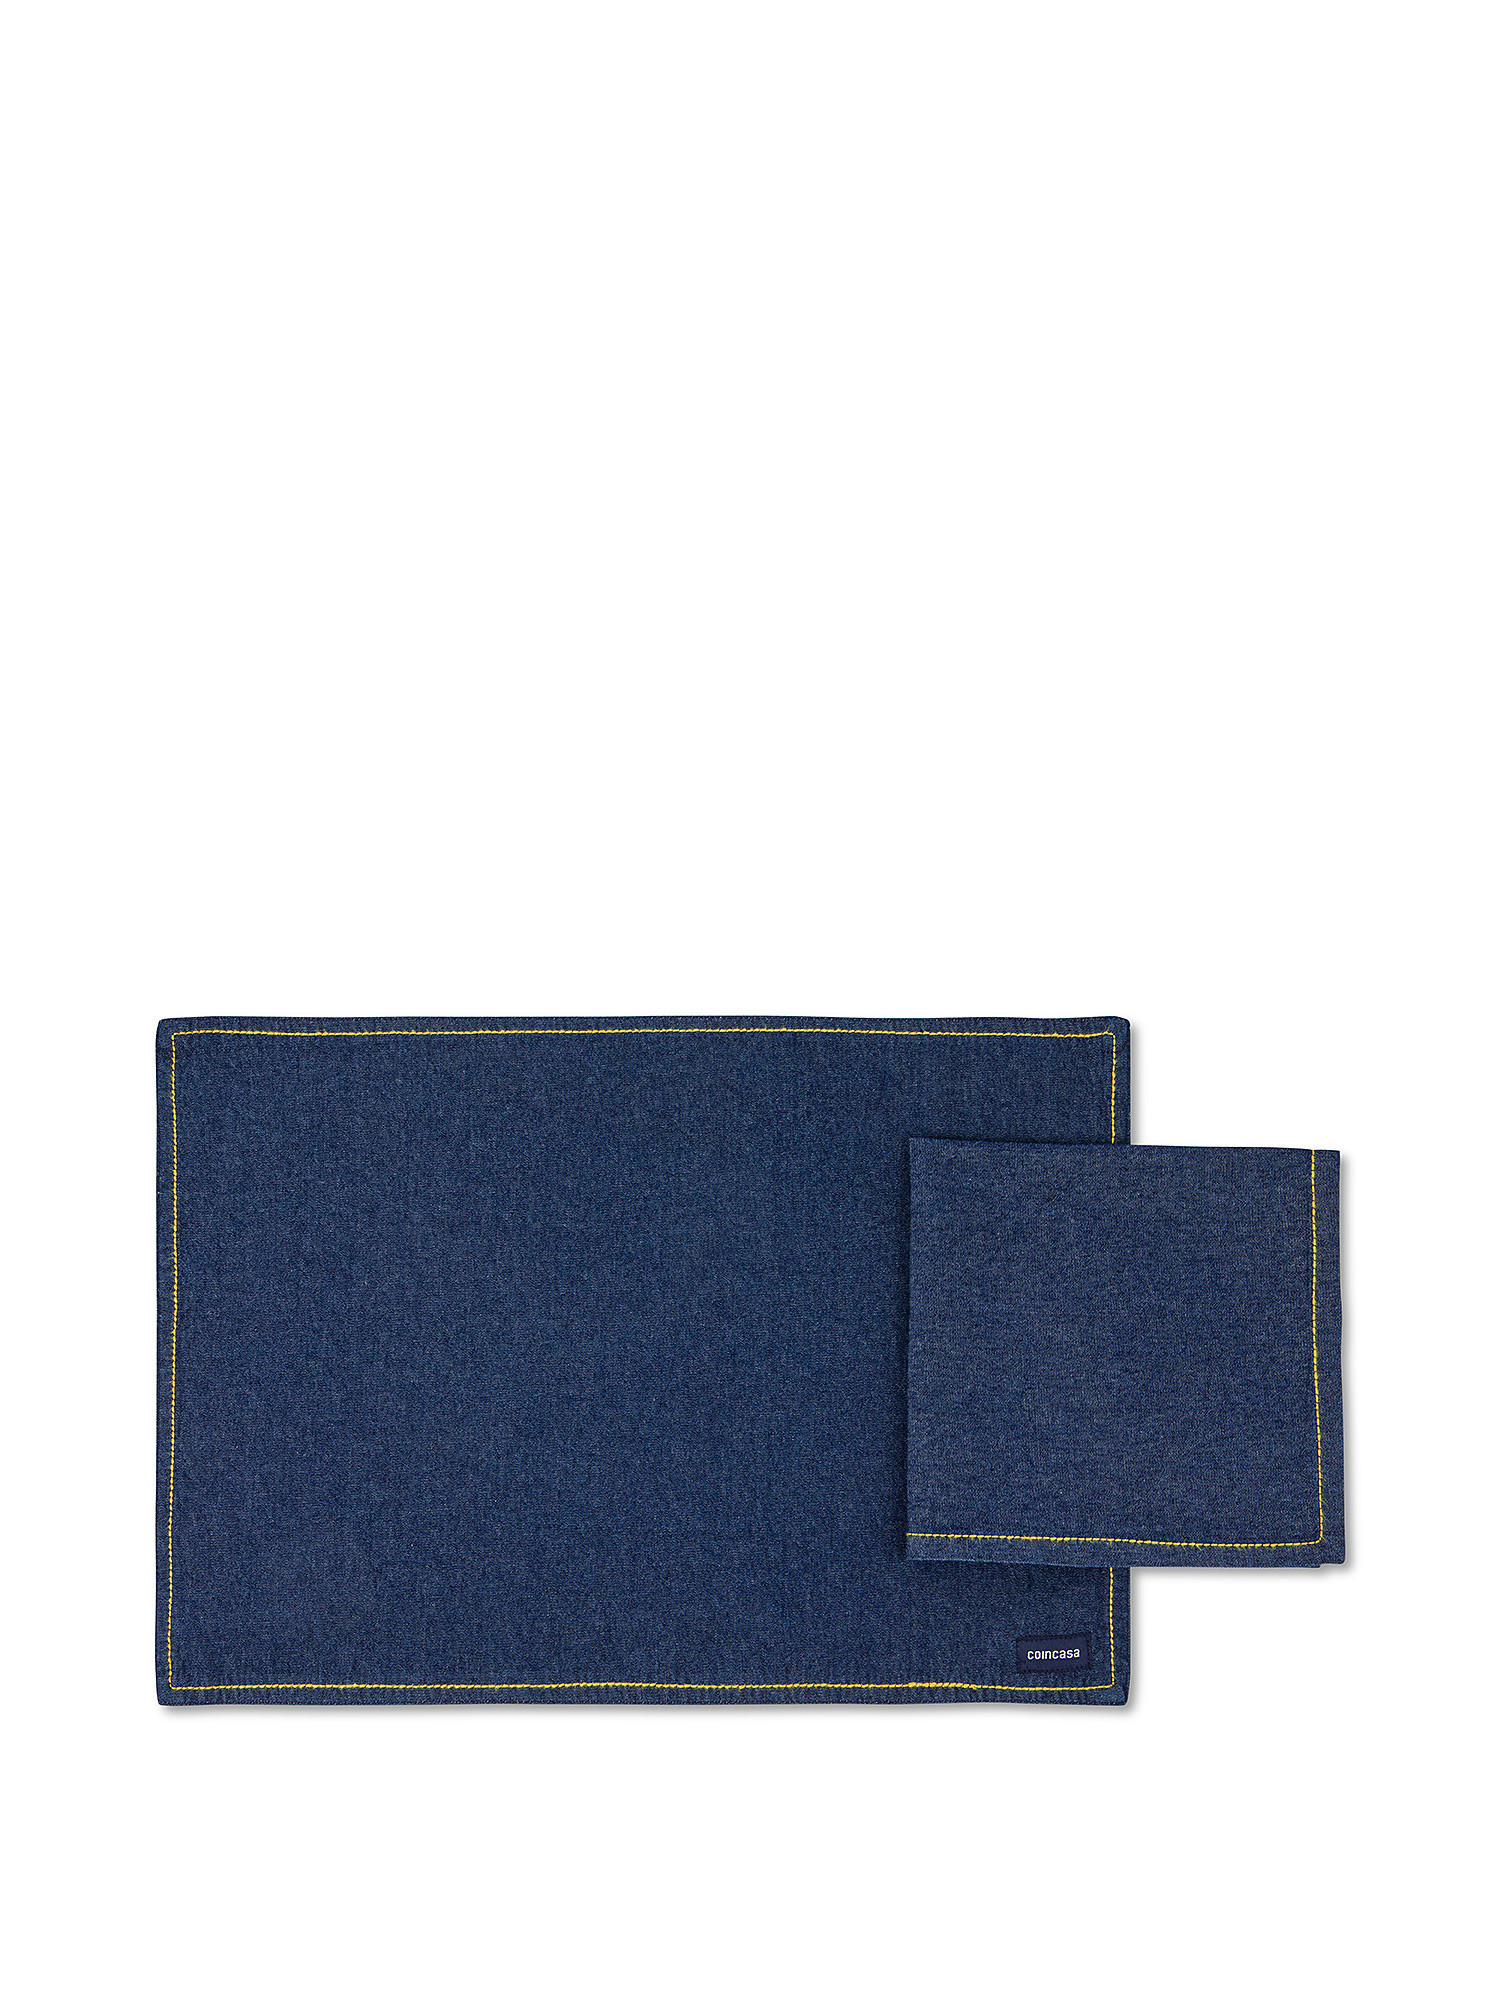 Cotton denim placemat and napkin set, Blue, large image number 0